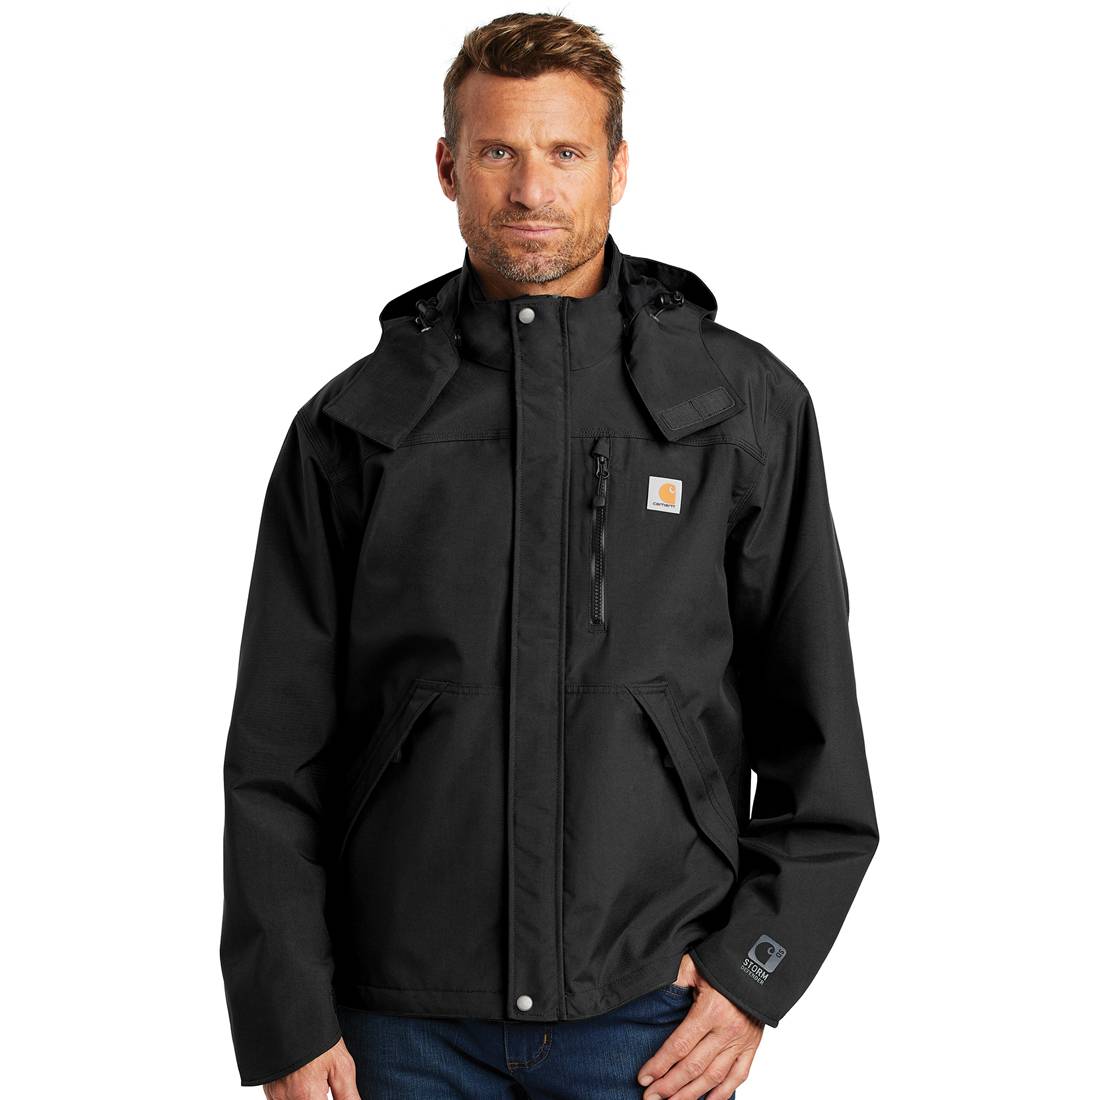 Apparel & Accessories :: Jackets & Vests :: Carhartt ® Shoreline Jacket